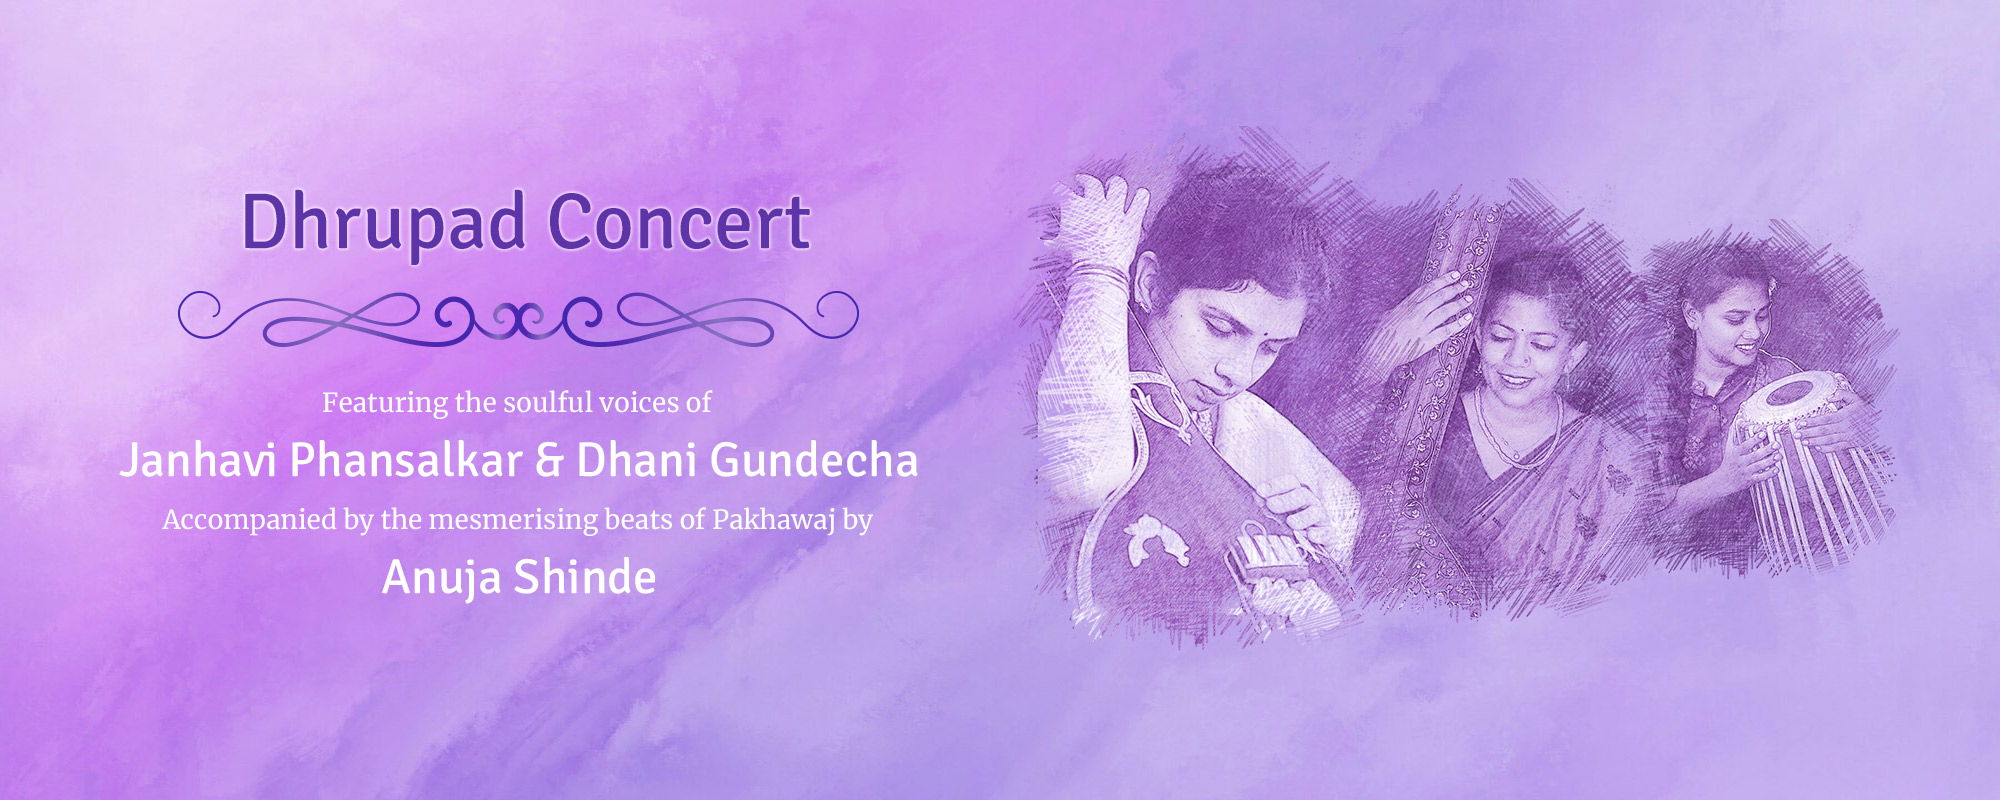 Dhrupad Concert - Details apge watch online